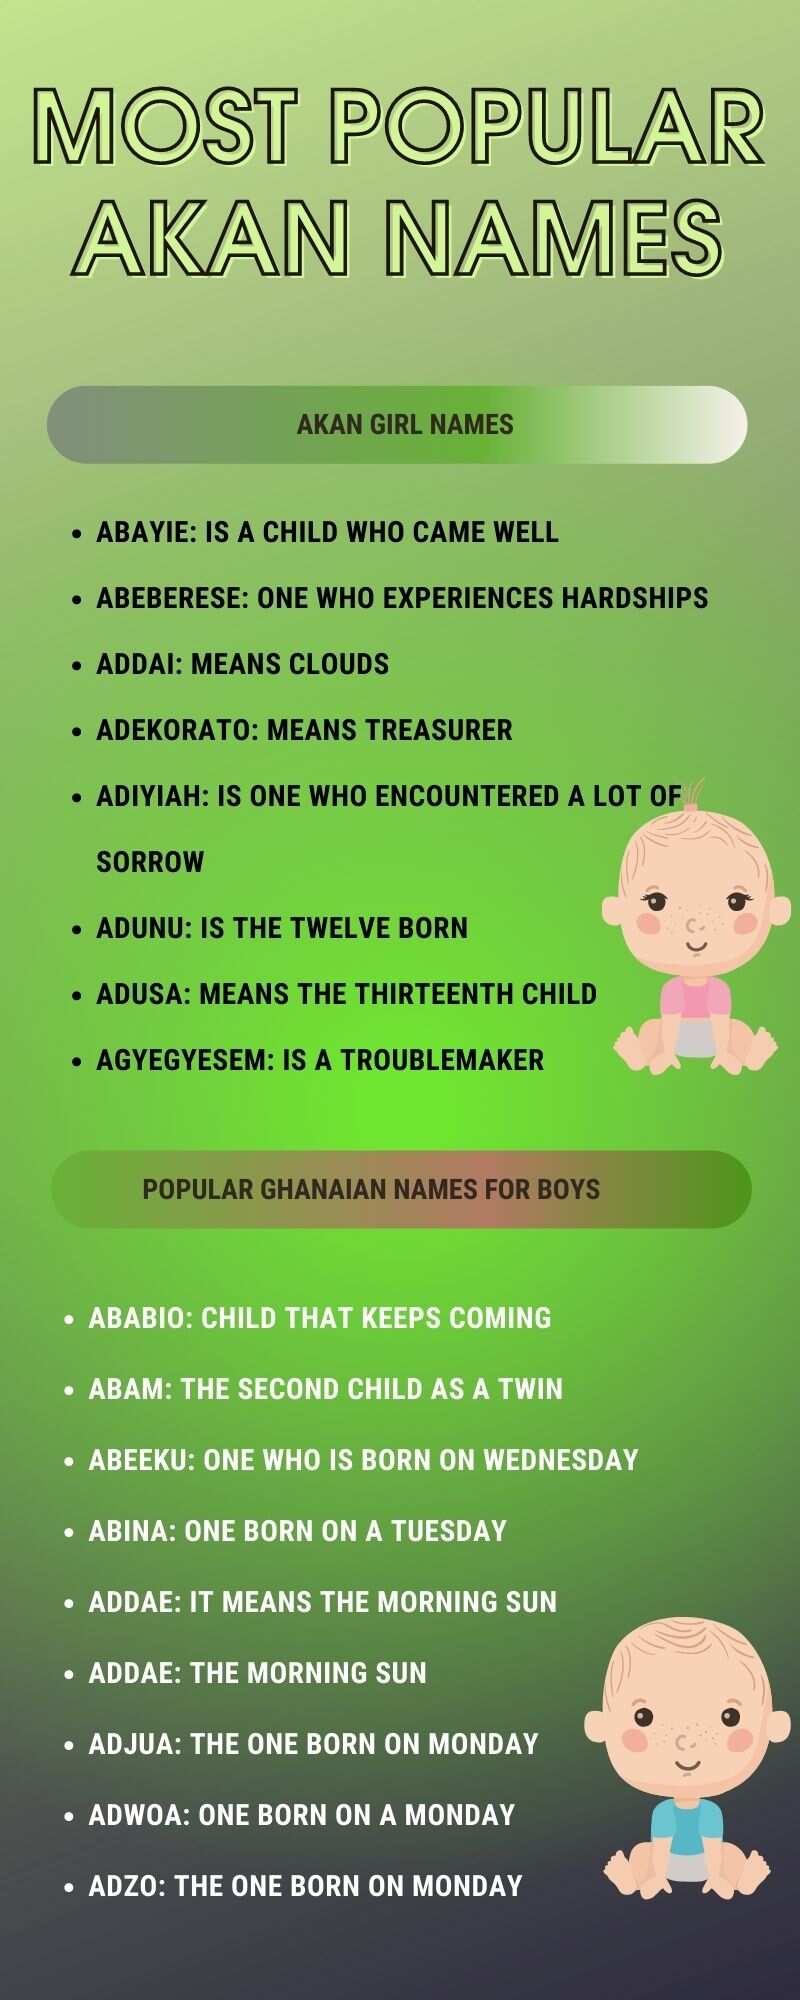 Most popular Akan names